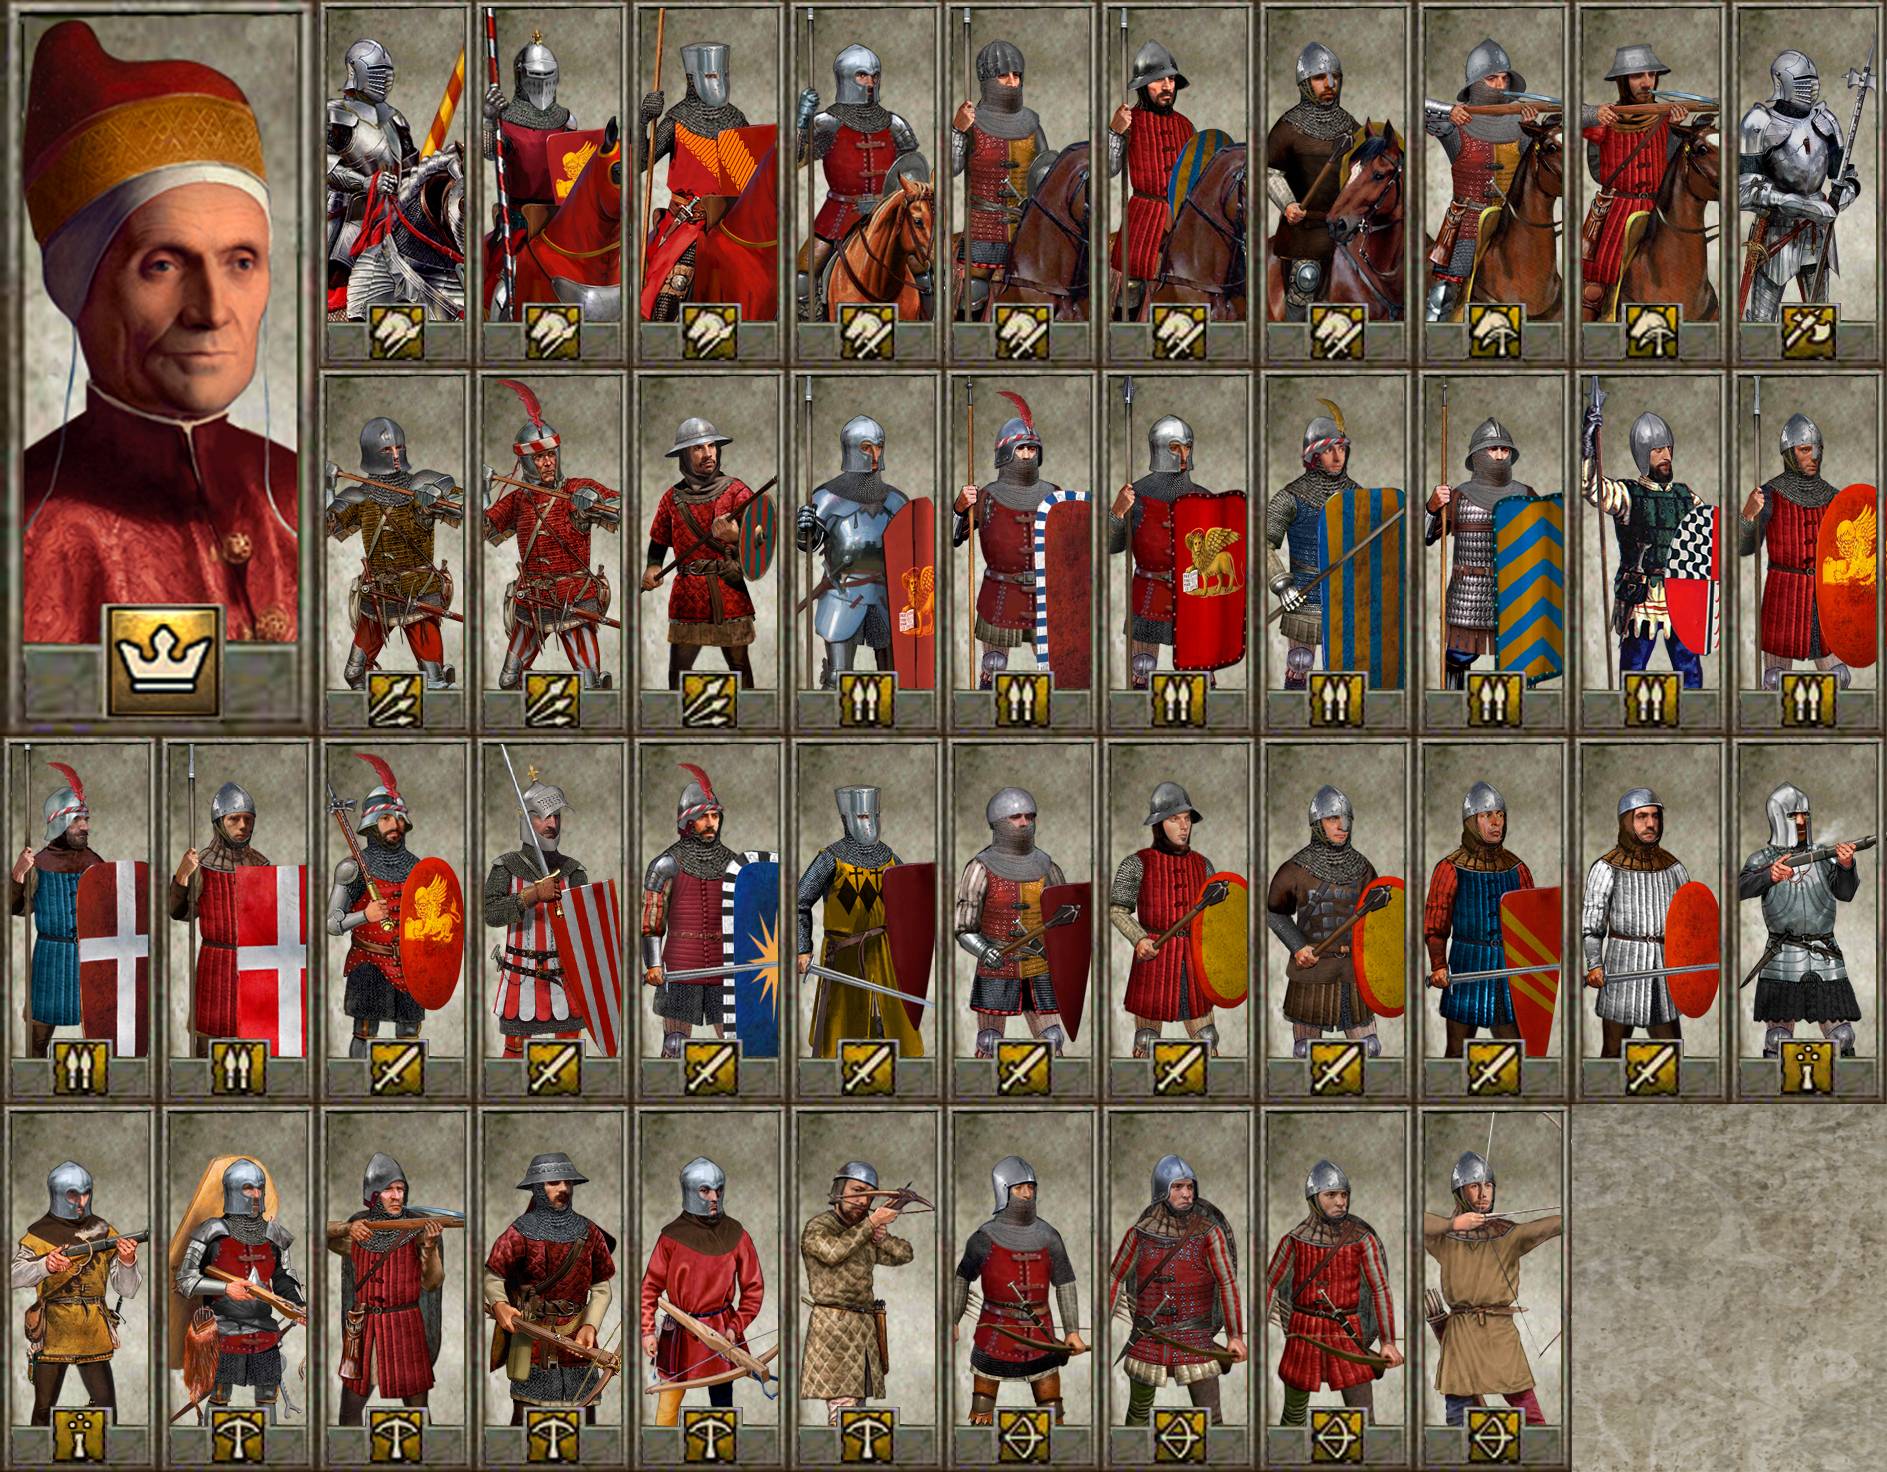 Medieval 2 total юнитов. Рим тотал вар 1 юниты. Рим тотал вар юниты.